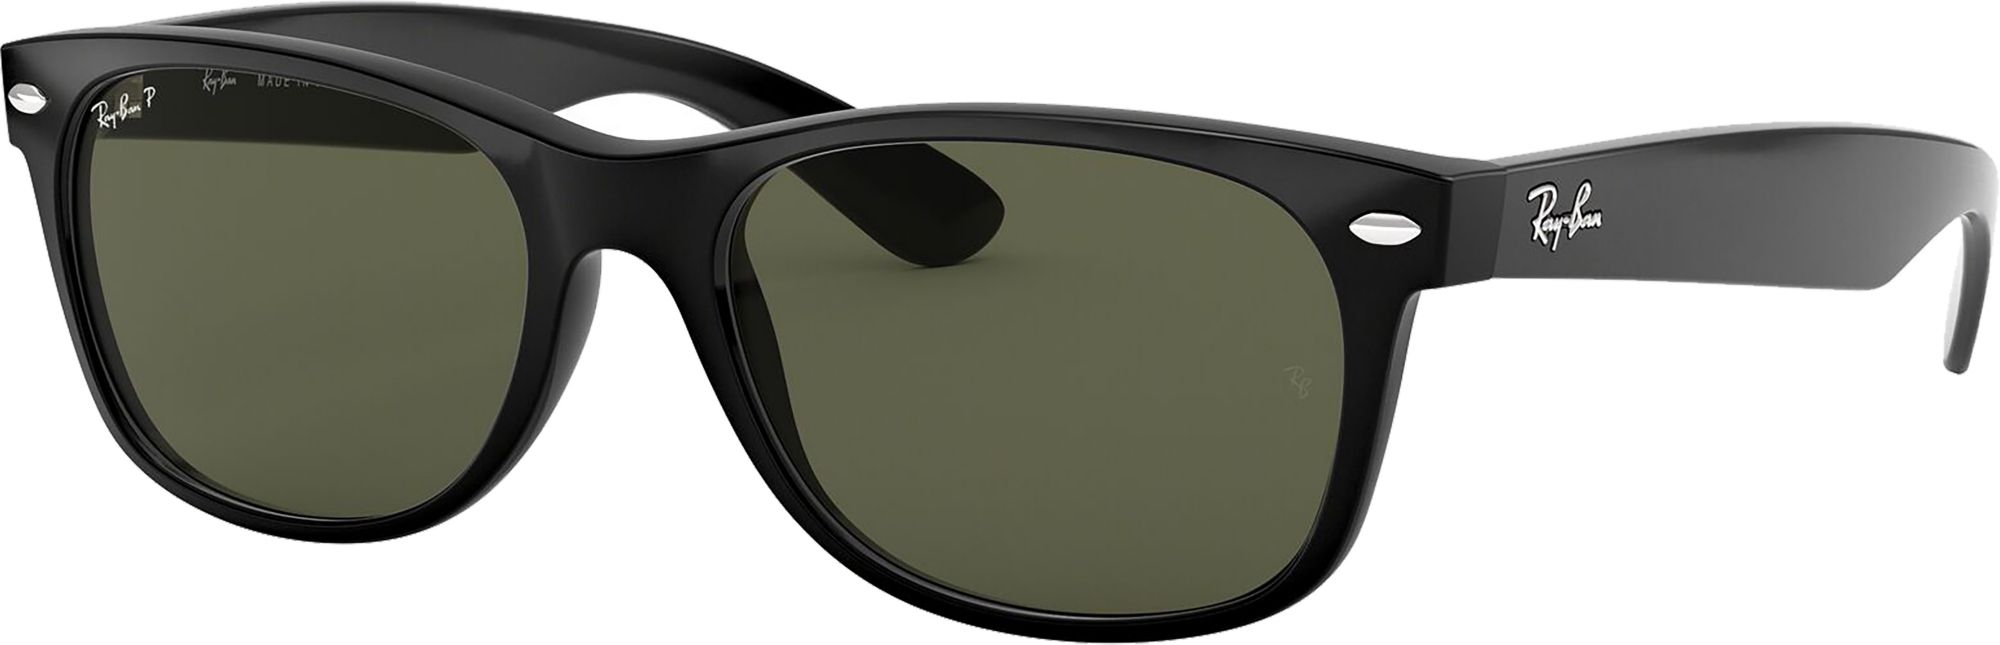 Photos - Sunglasses Ray-Ban New Wayfarer Classics Polarized , Men's, Crystal Green P 